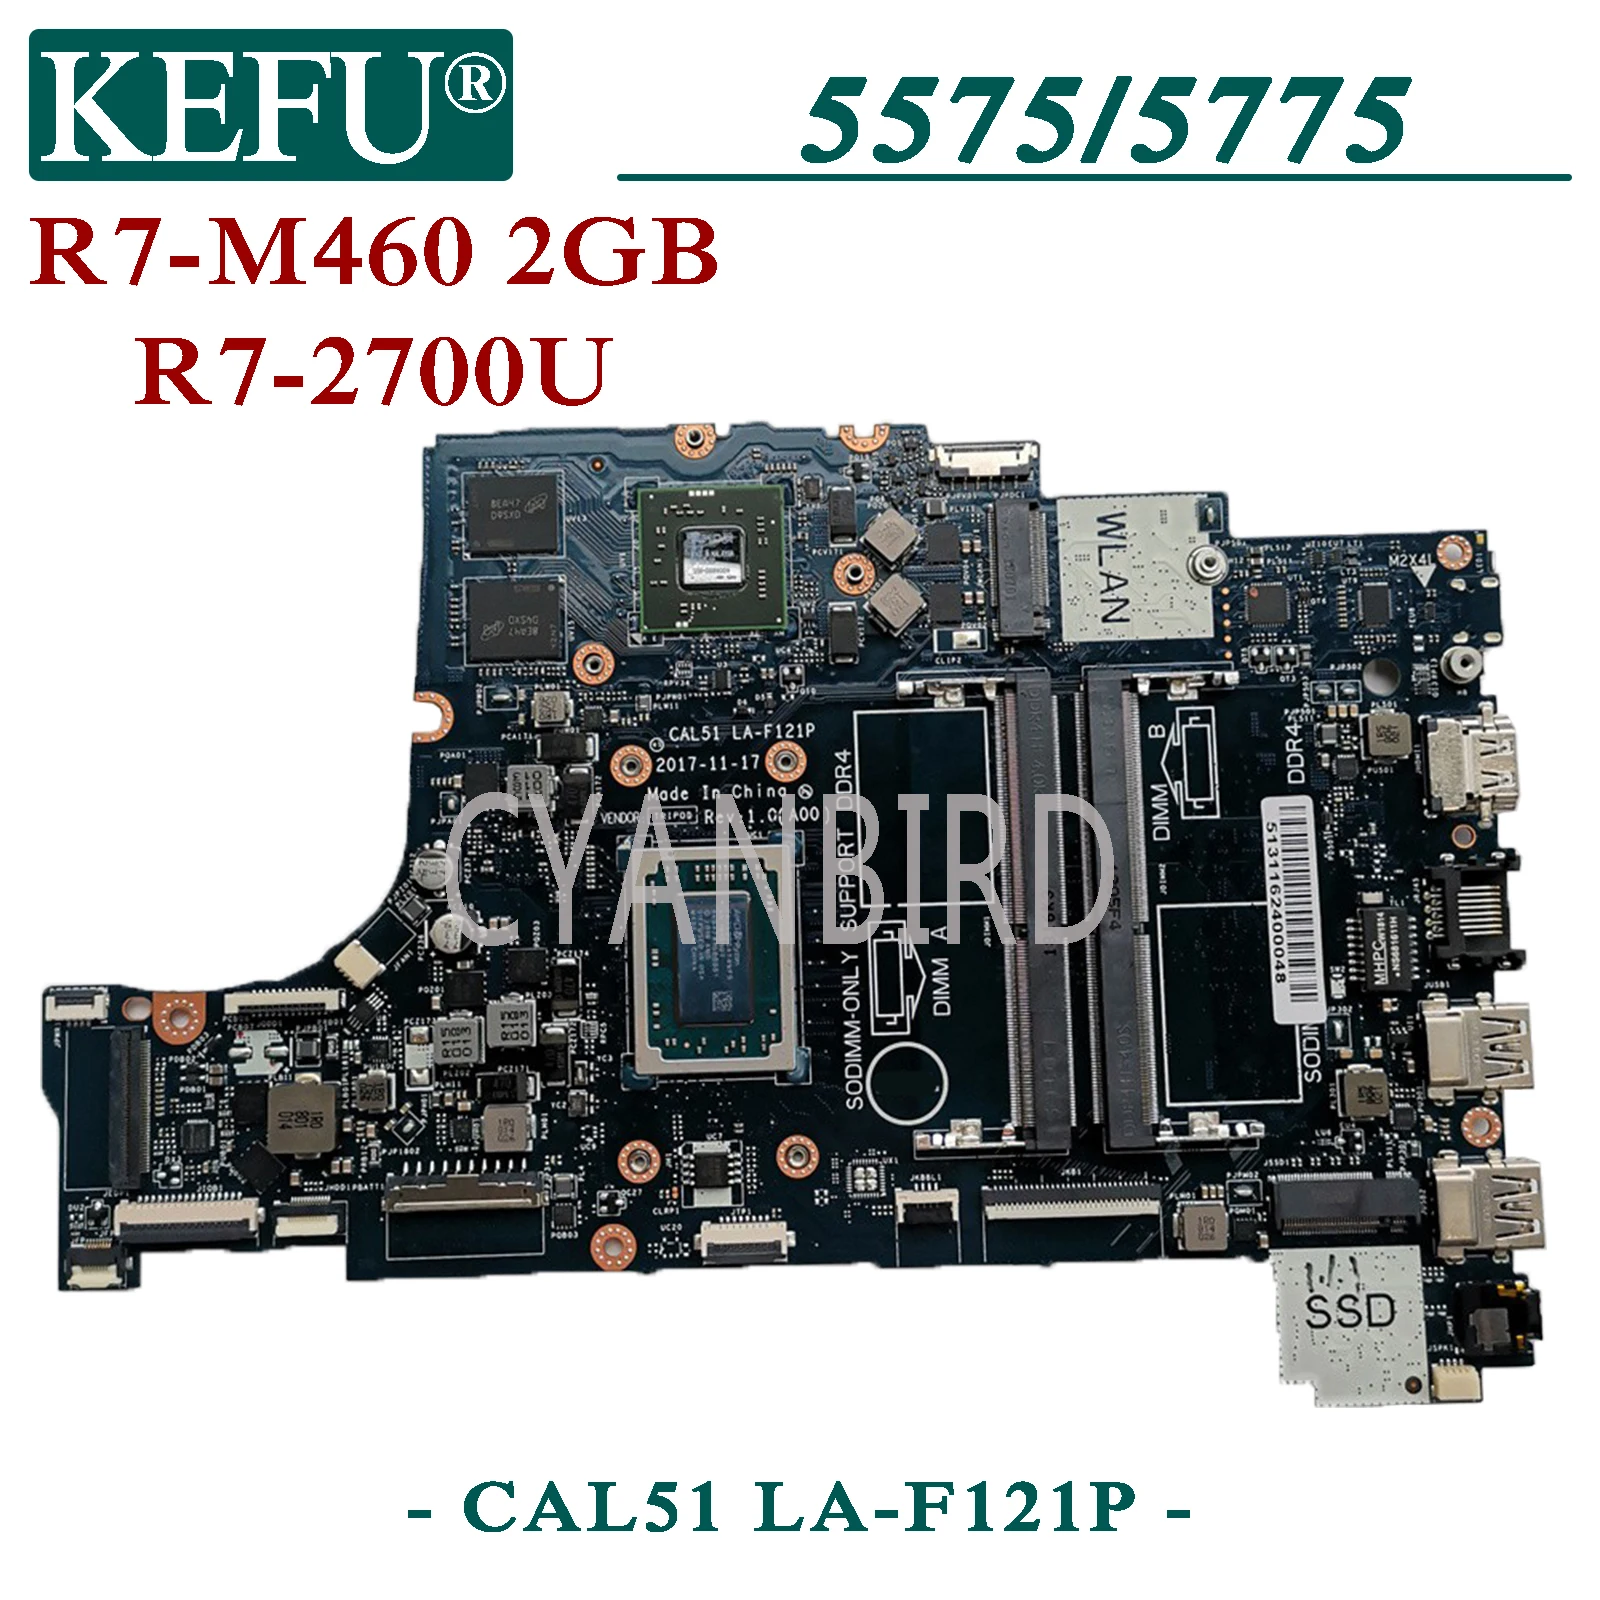 

KEFU CAL51 LA-F121P original mainboard for Dell Inspiron 5575 5775 with R7-2700U R7-M460 2GB Laptop motherboard